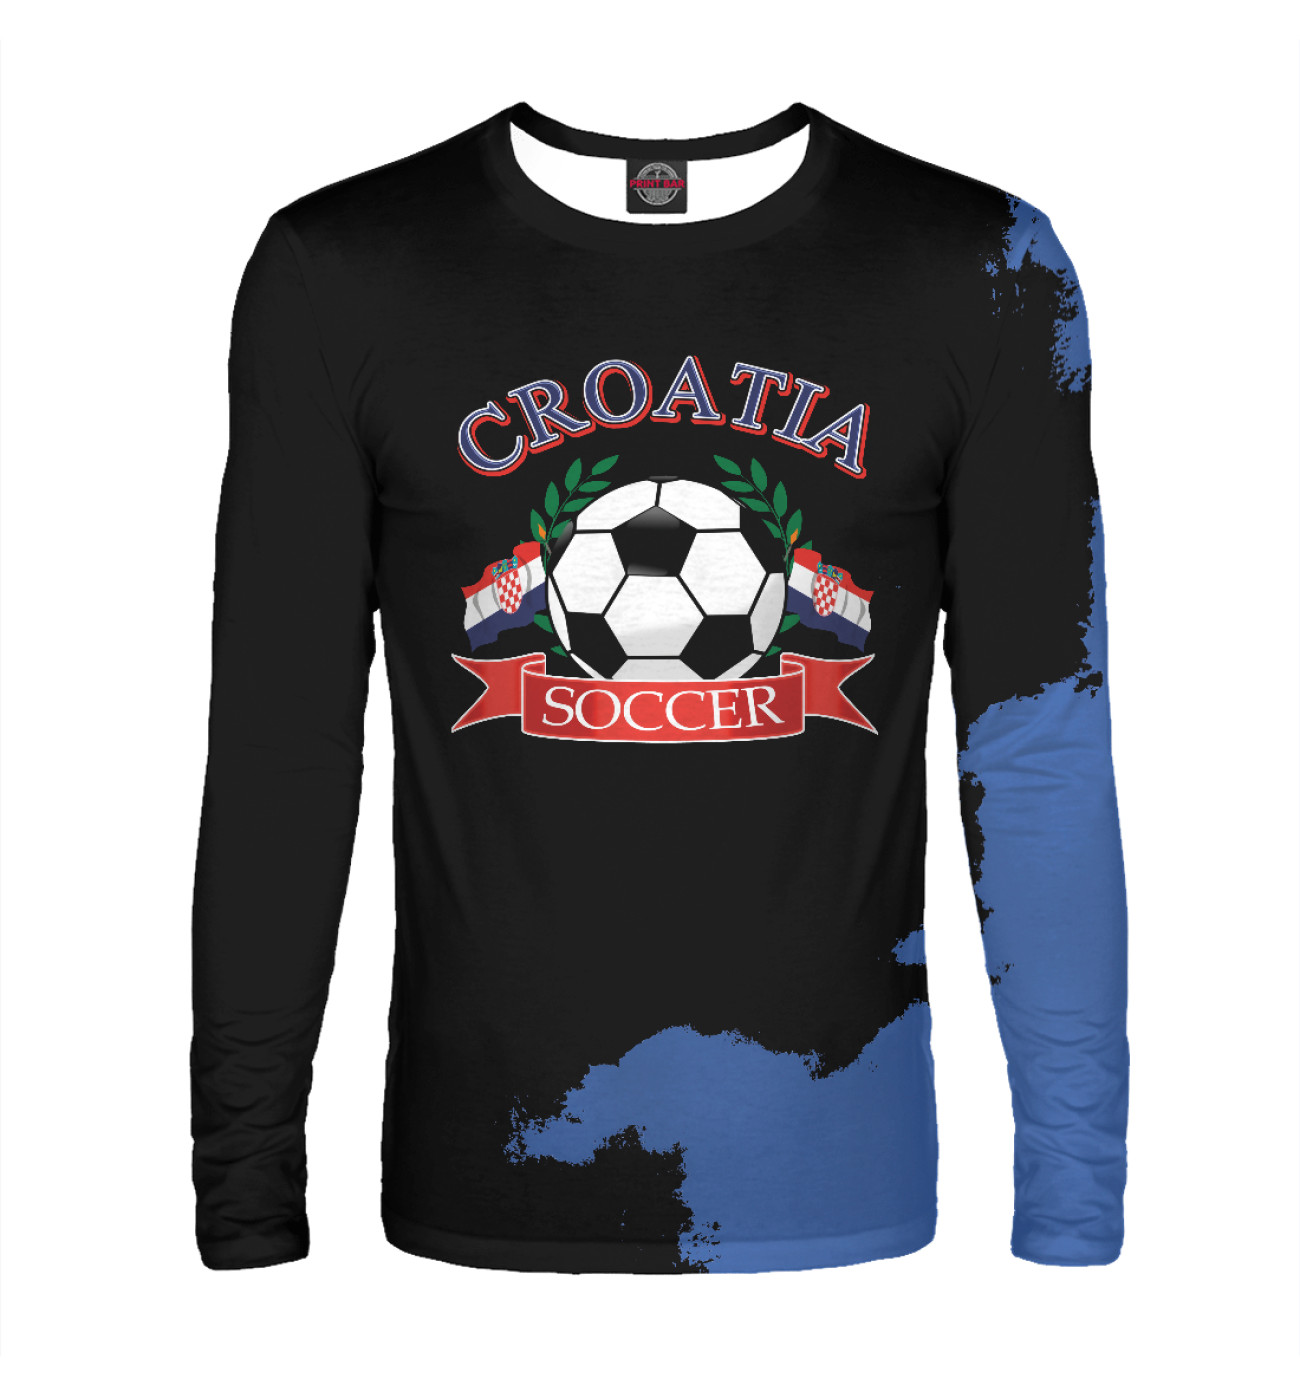 Мужской Лонгслив Croatia soccer ball, артикул: FTO-670002-lon-2